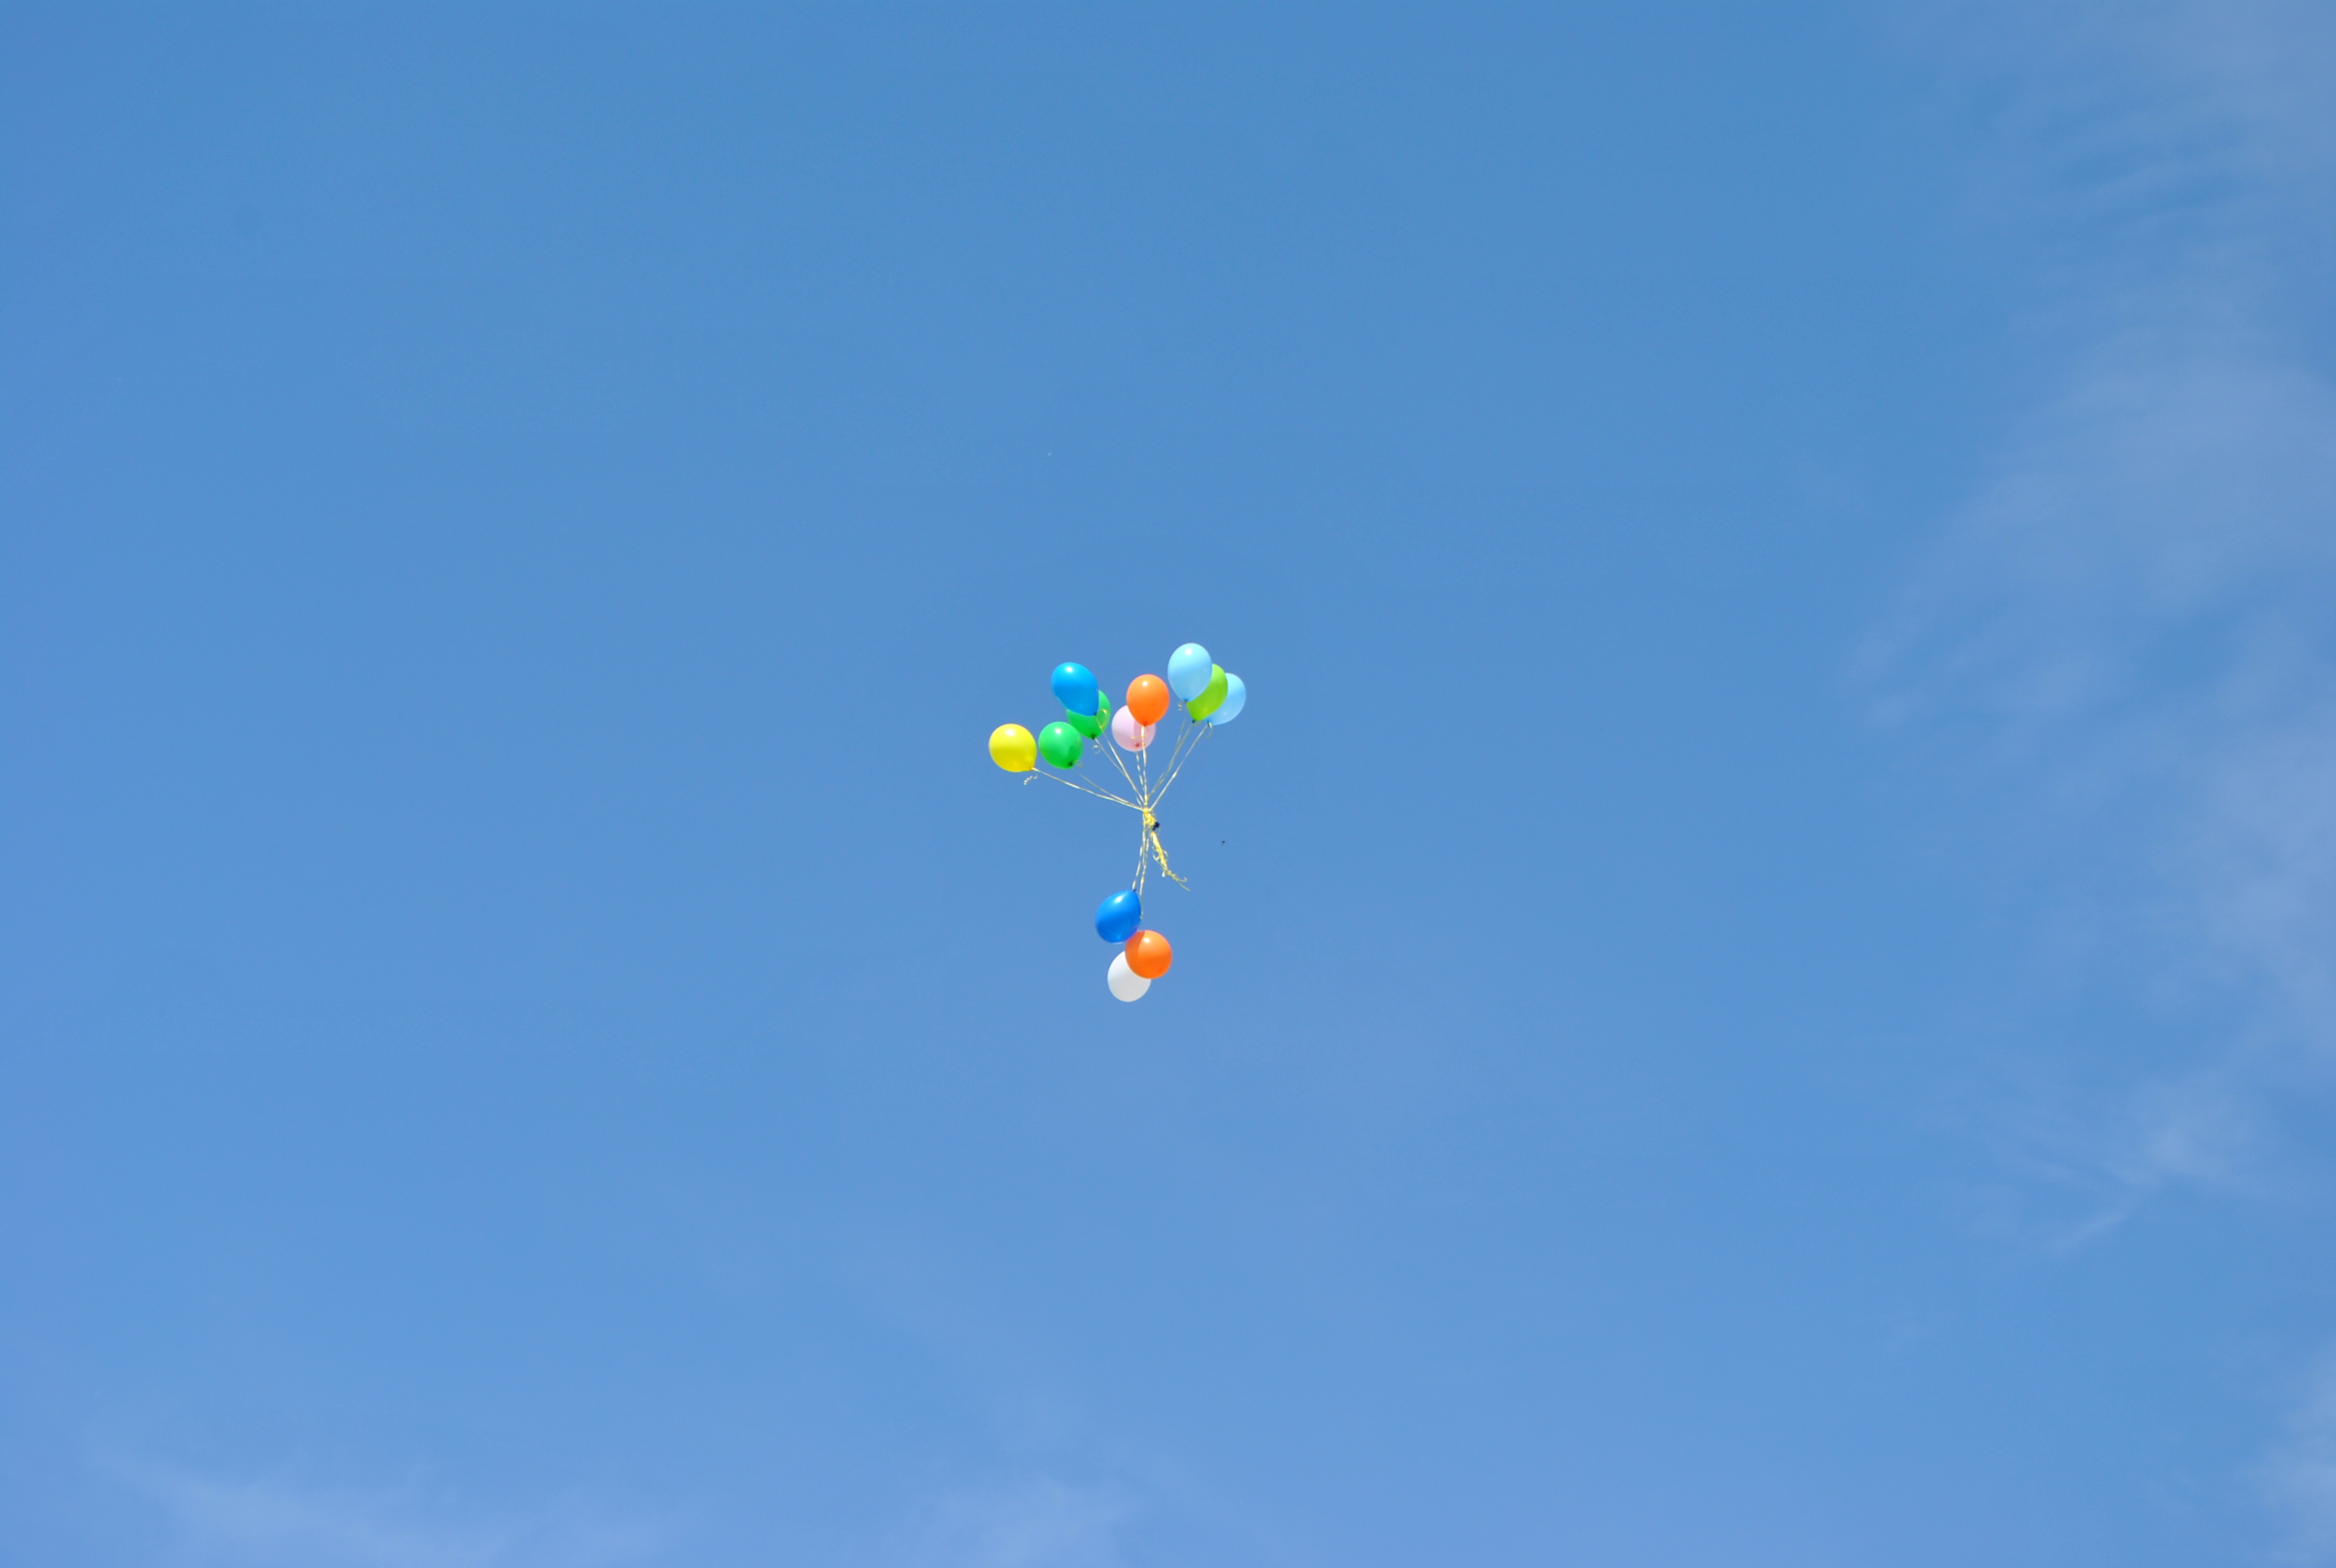 Sky Blu Helium Bubble. Helium Floating Art. 1 июня семенов